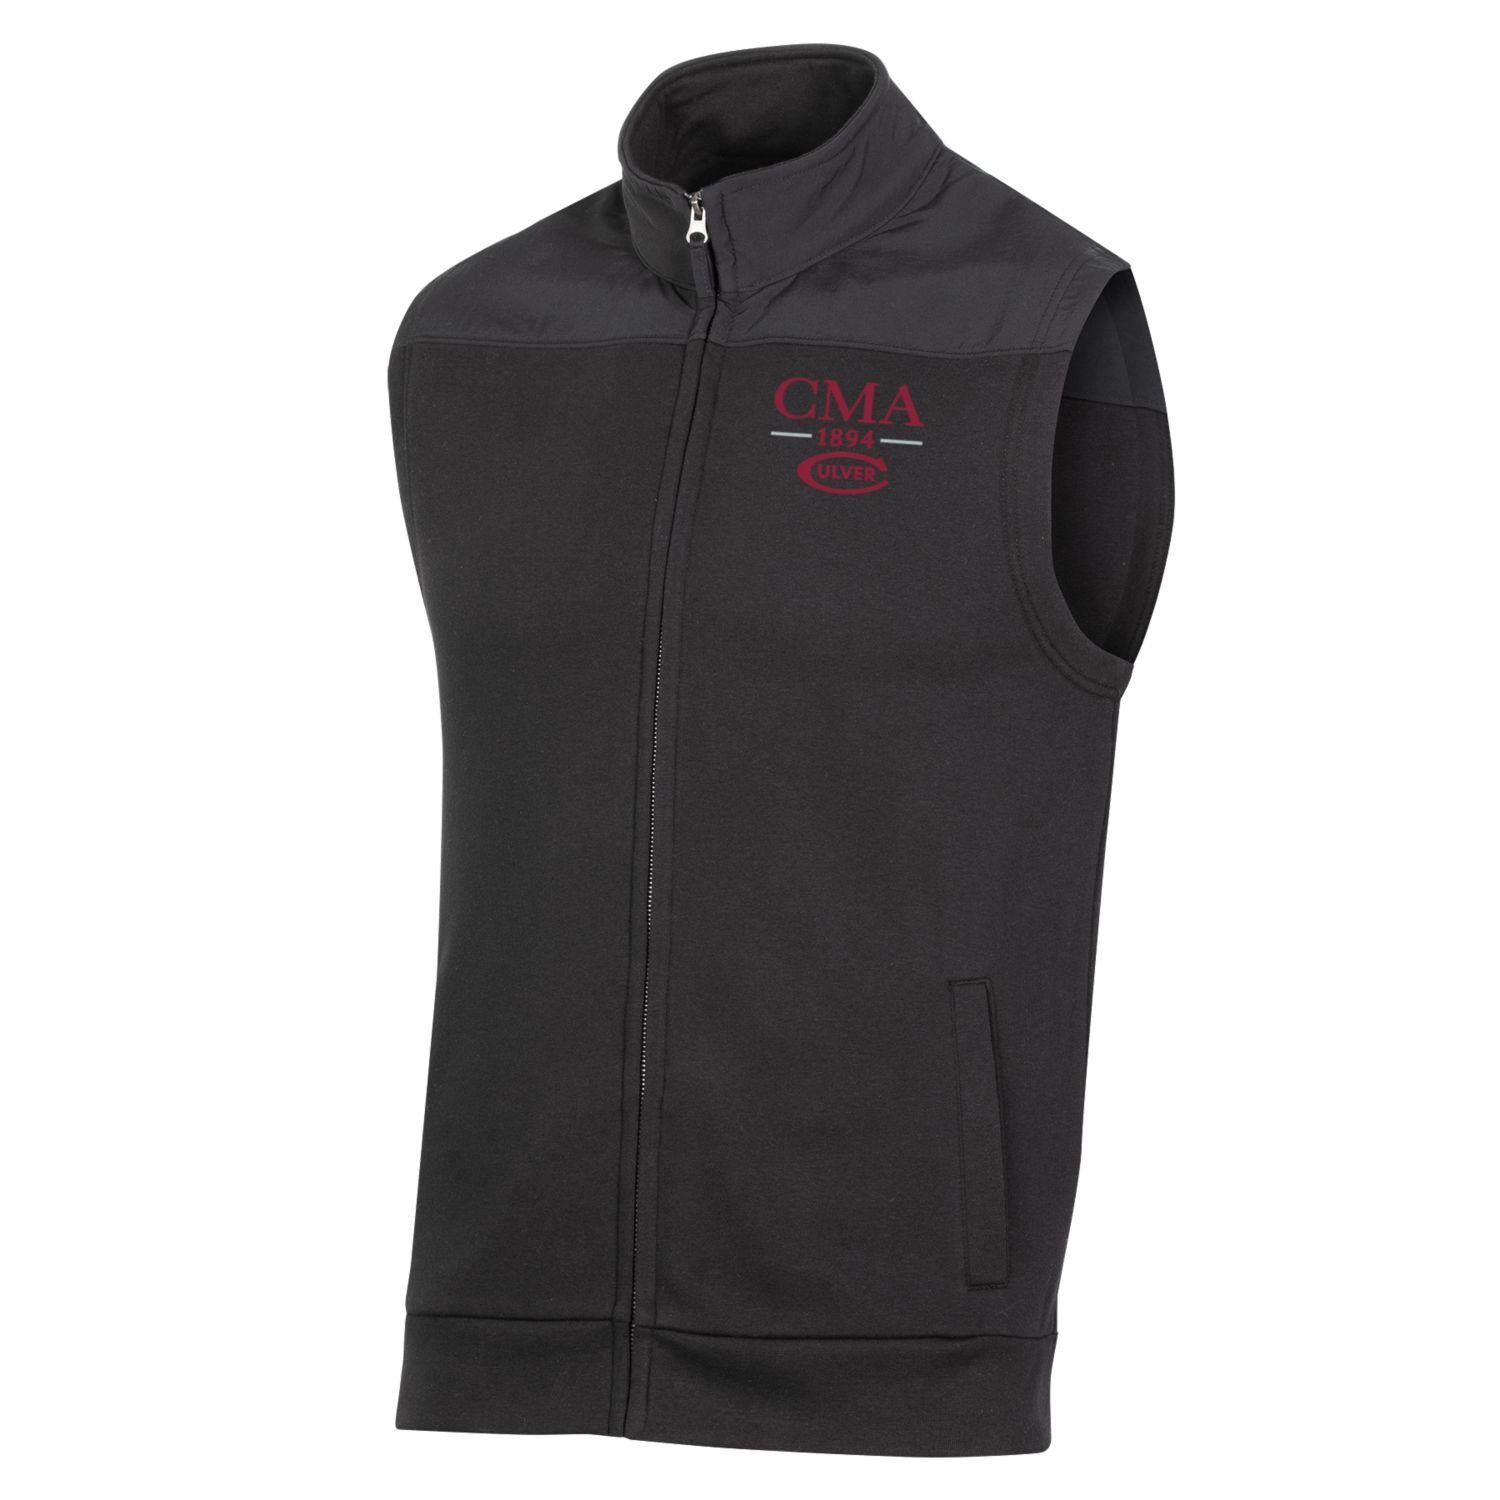 Gear CMA Vest - Black